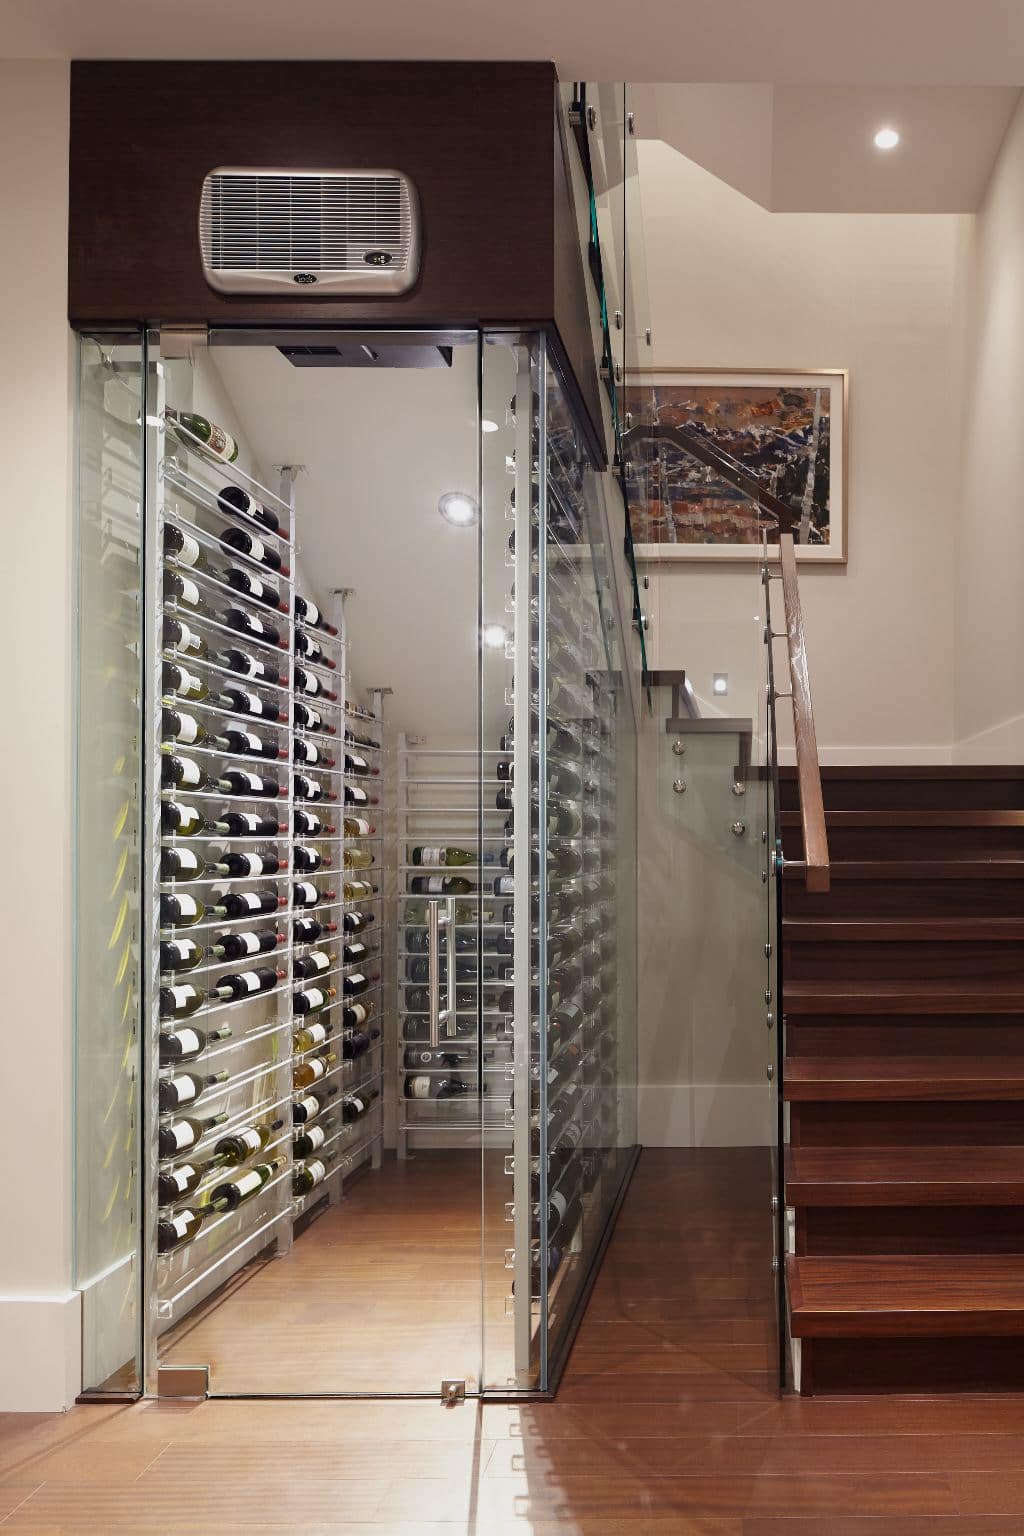 Las Vegas Builder Installed a Custom Glass Wine Cellar Under the Stairs